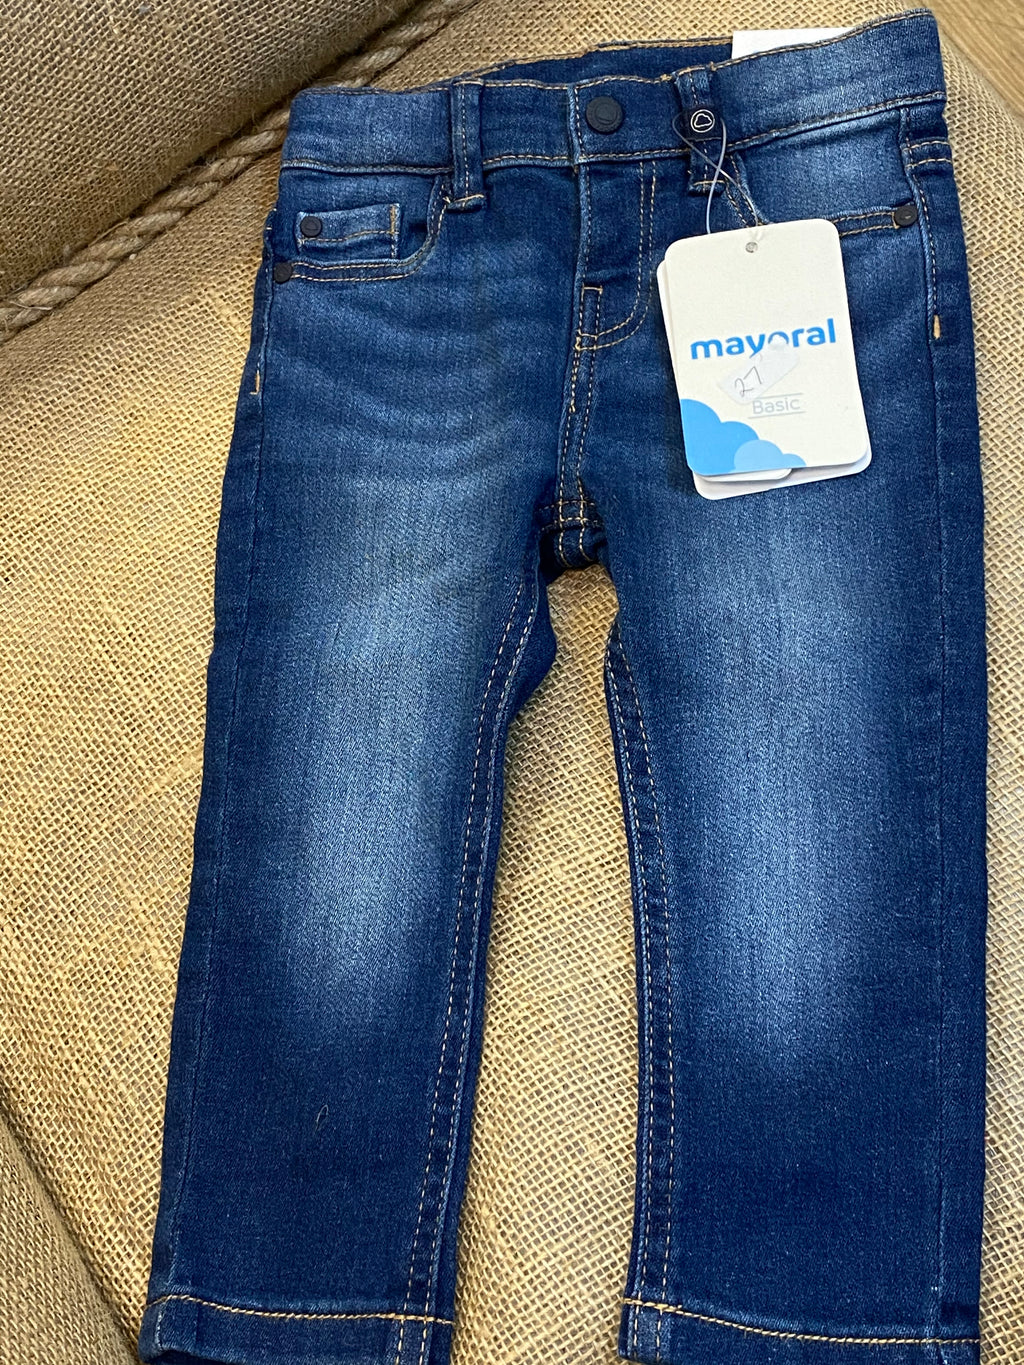 Mayoral Boys Jeans 510-77